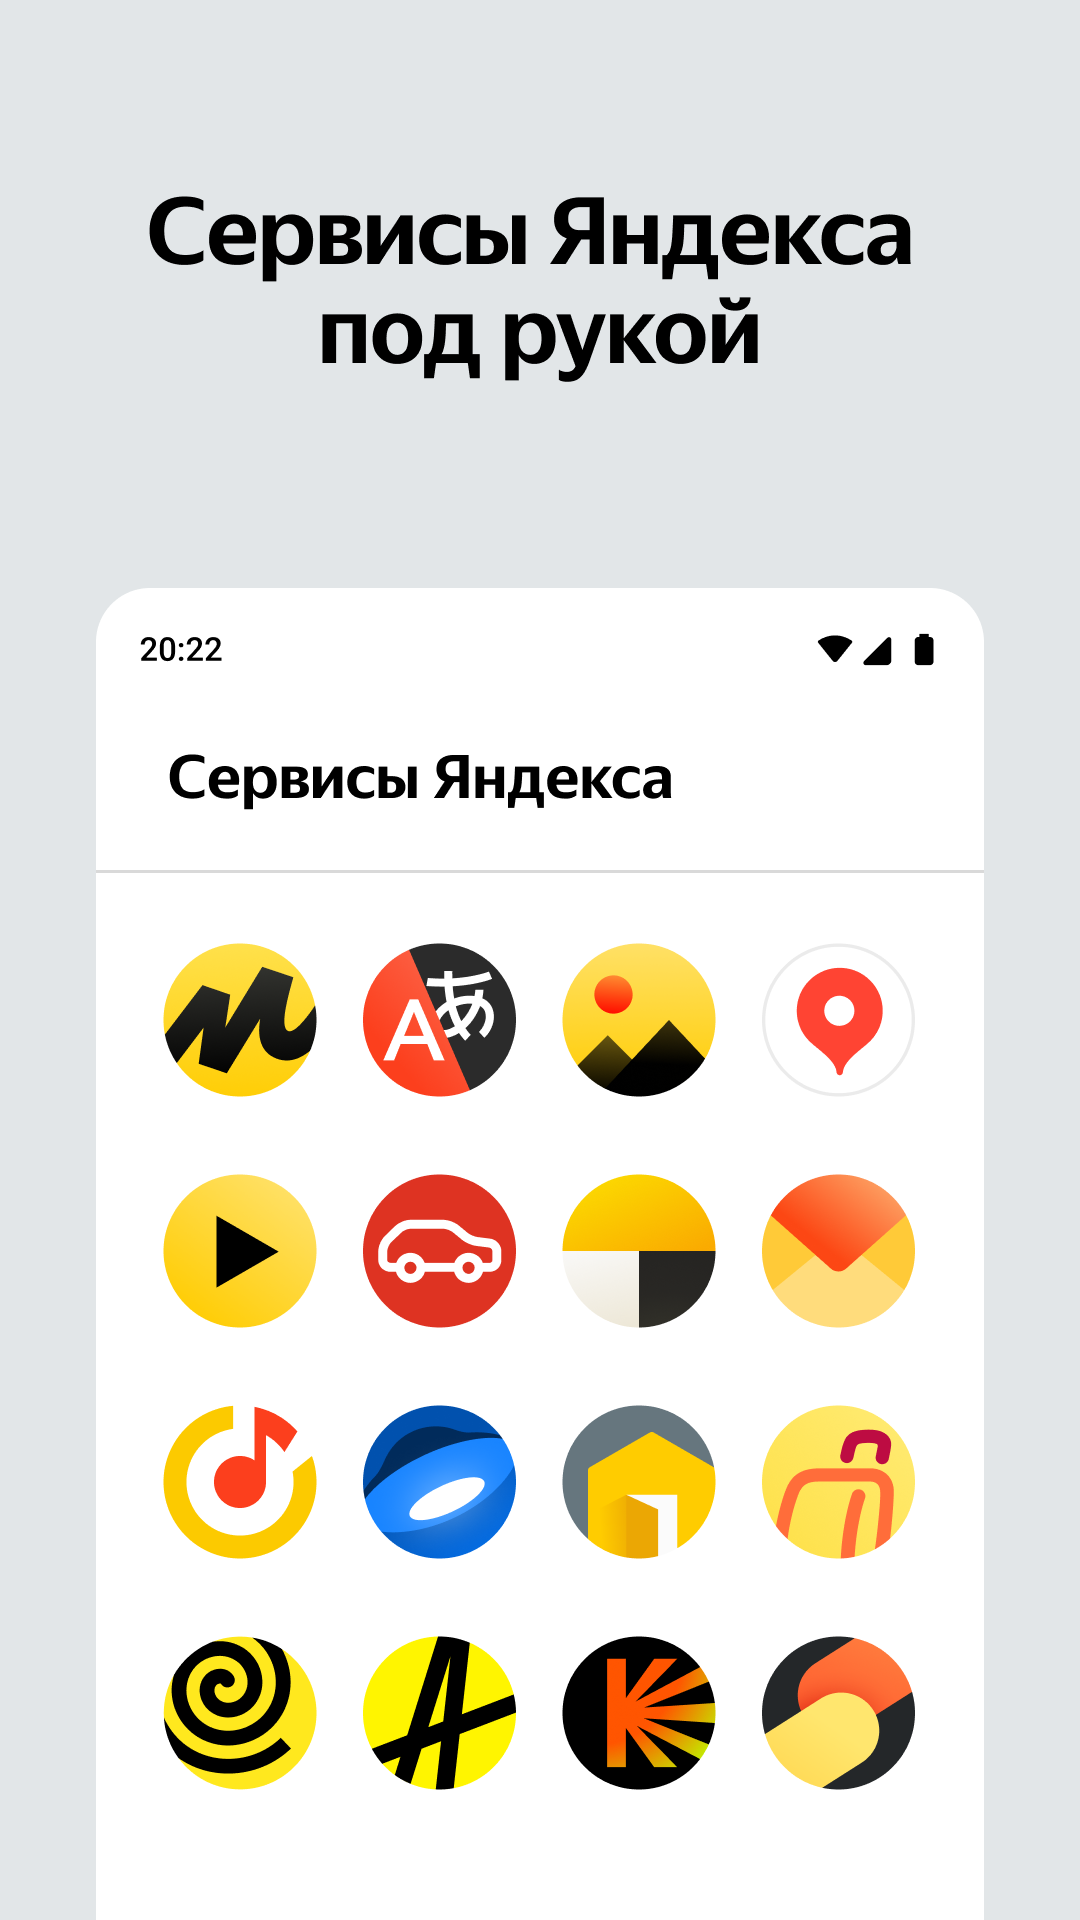 Как скачать фото с Яндекс Фото